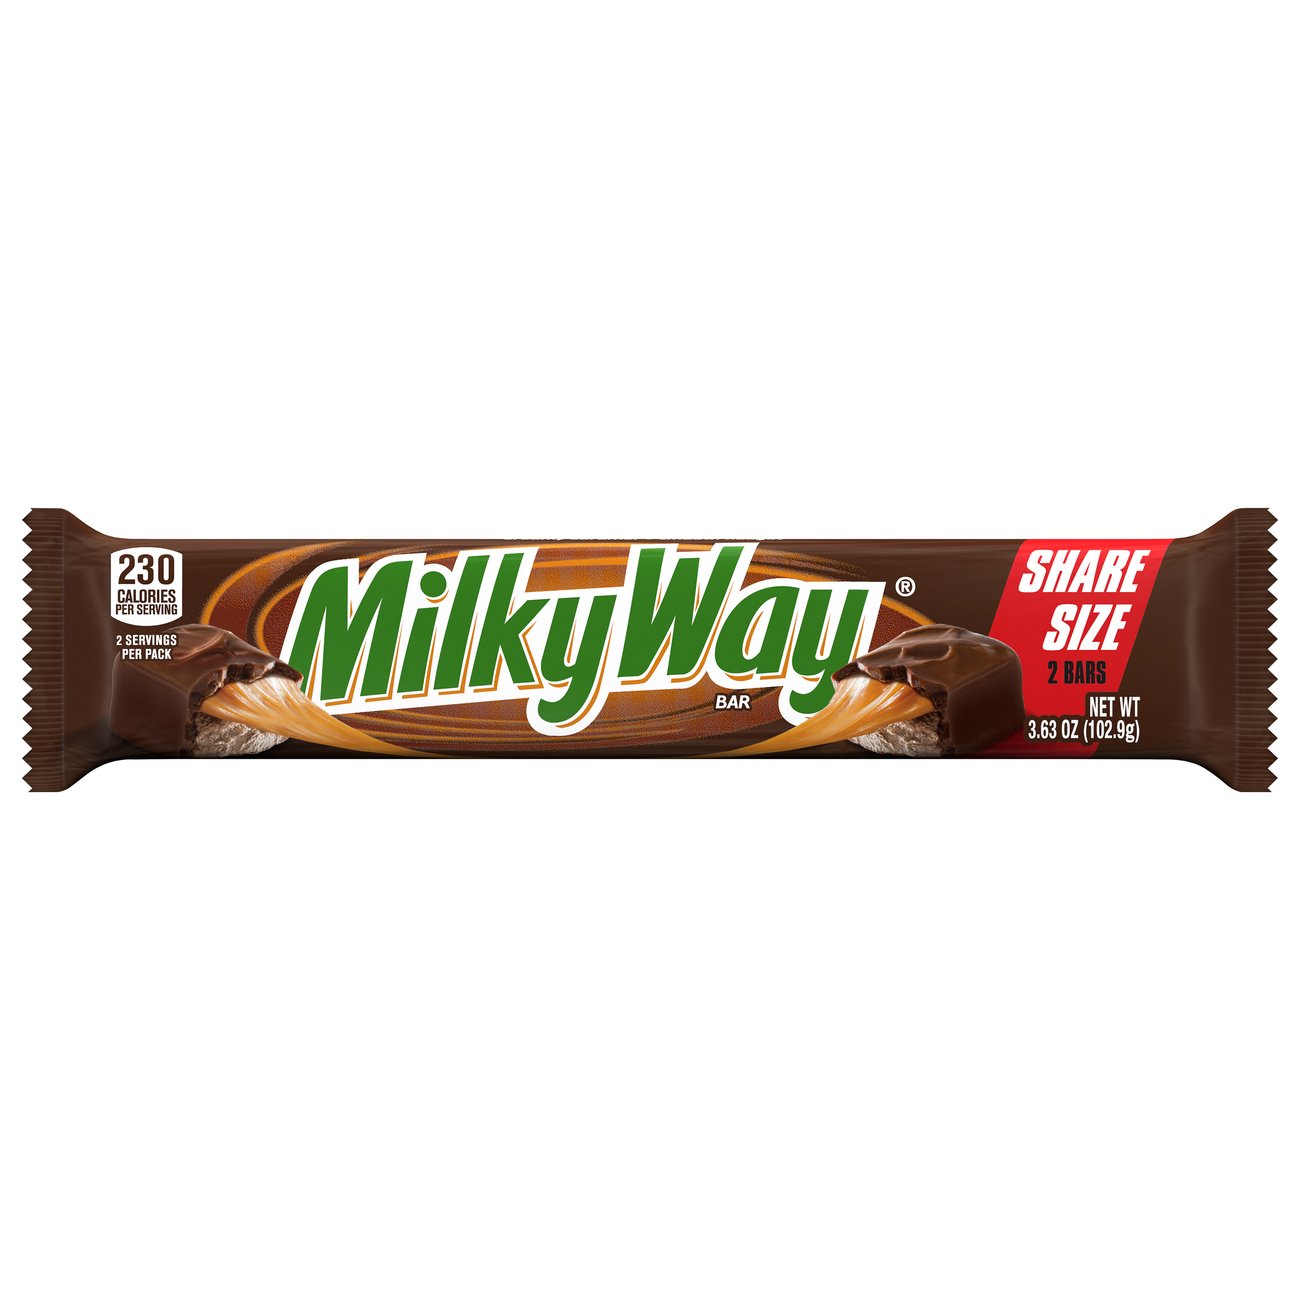 Milky Way Milk Chocolate Share Size Candy Bar Shop Candy At H E B